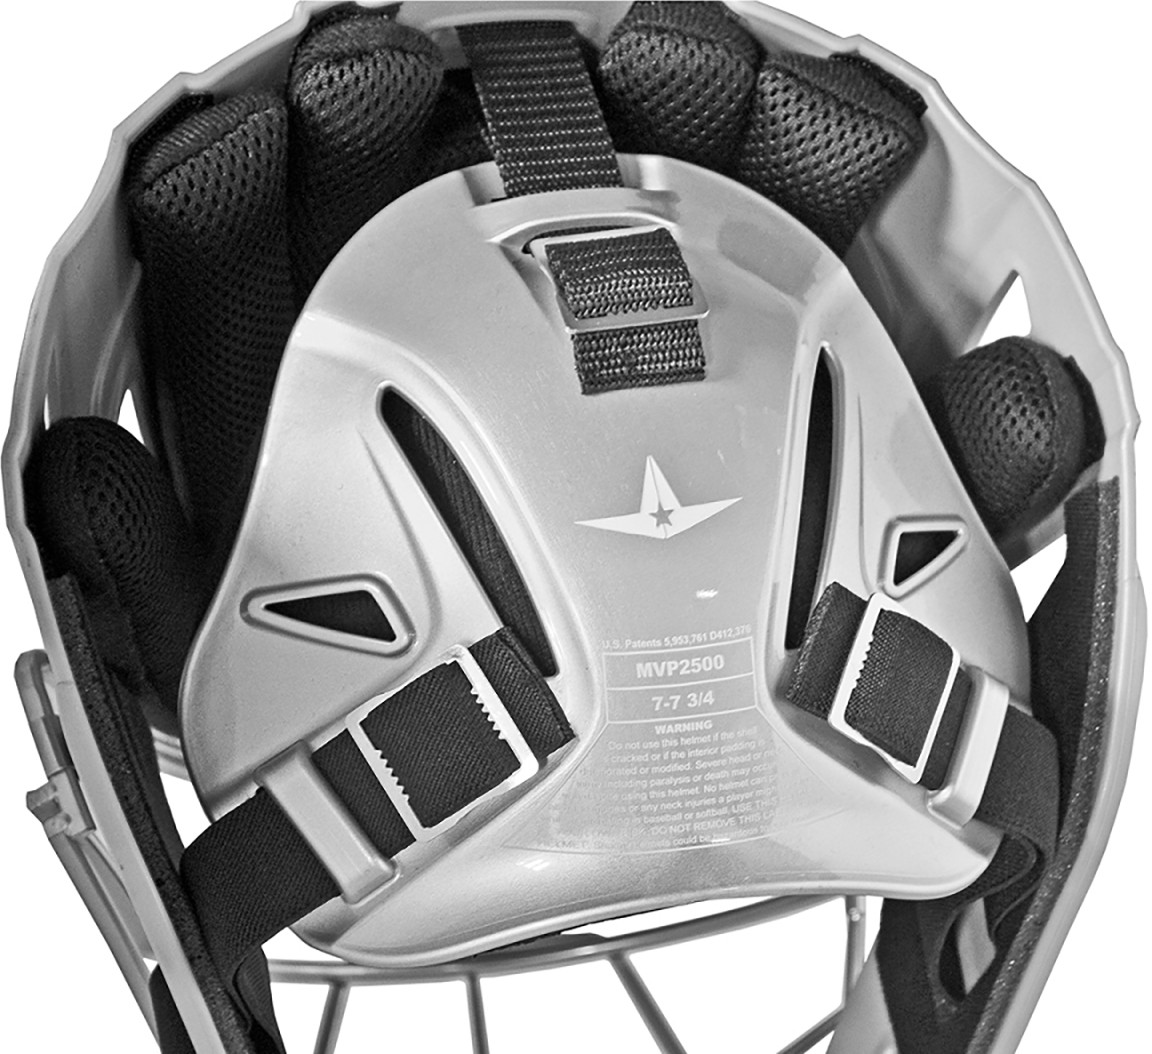 All-Star MVP2510 System 7 Catcher's Helmet, YOUTH